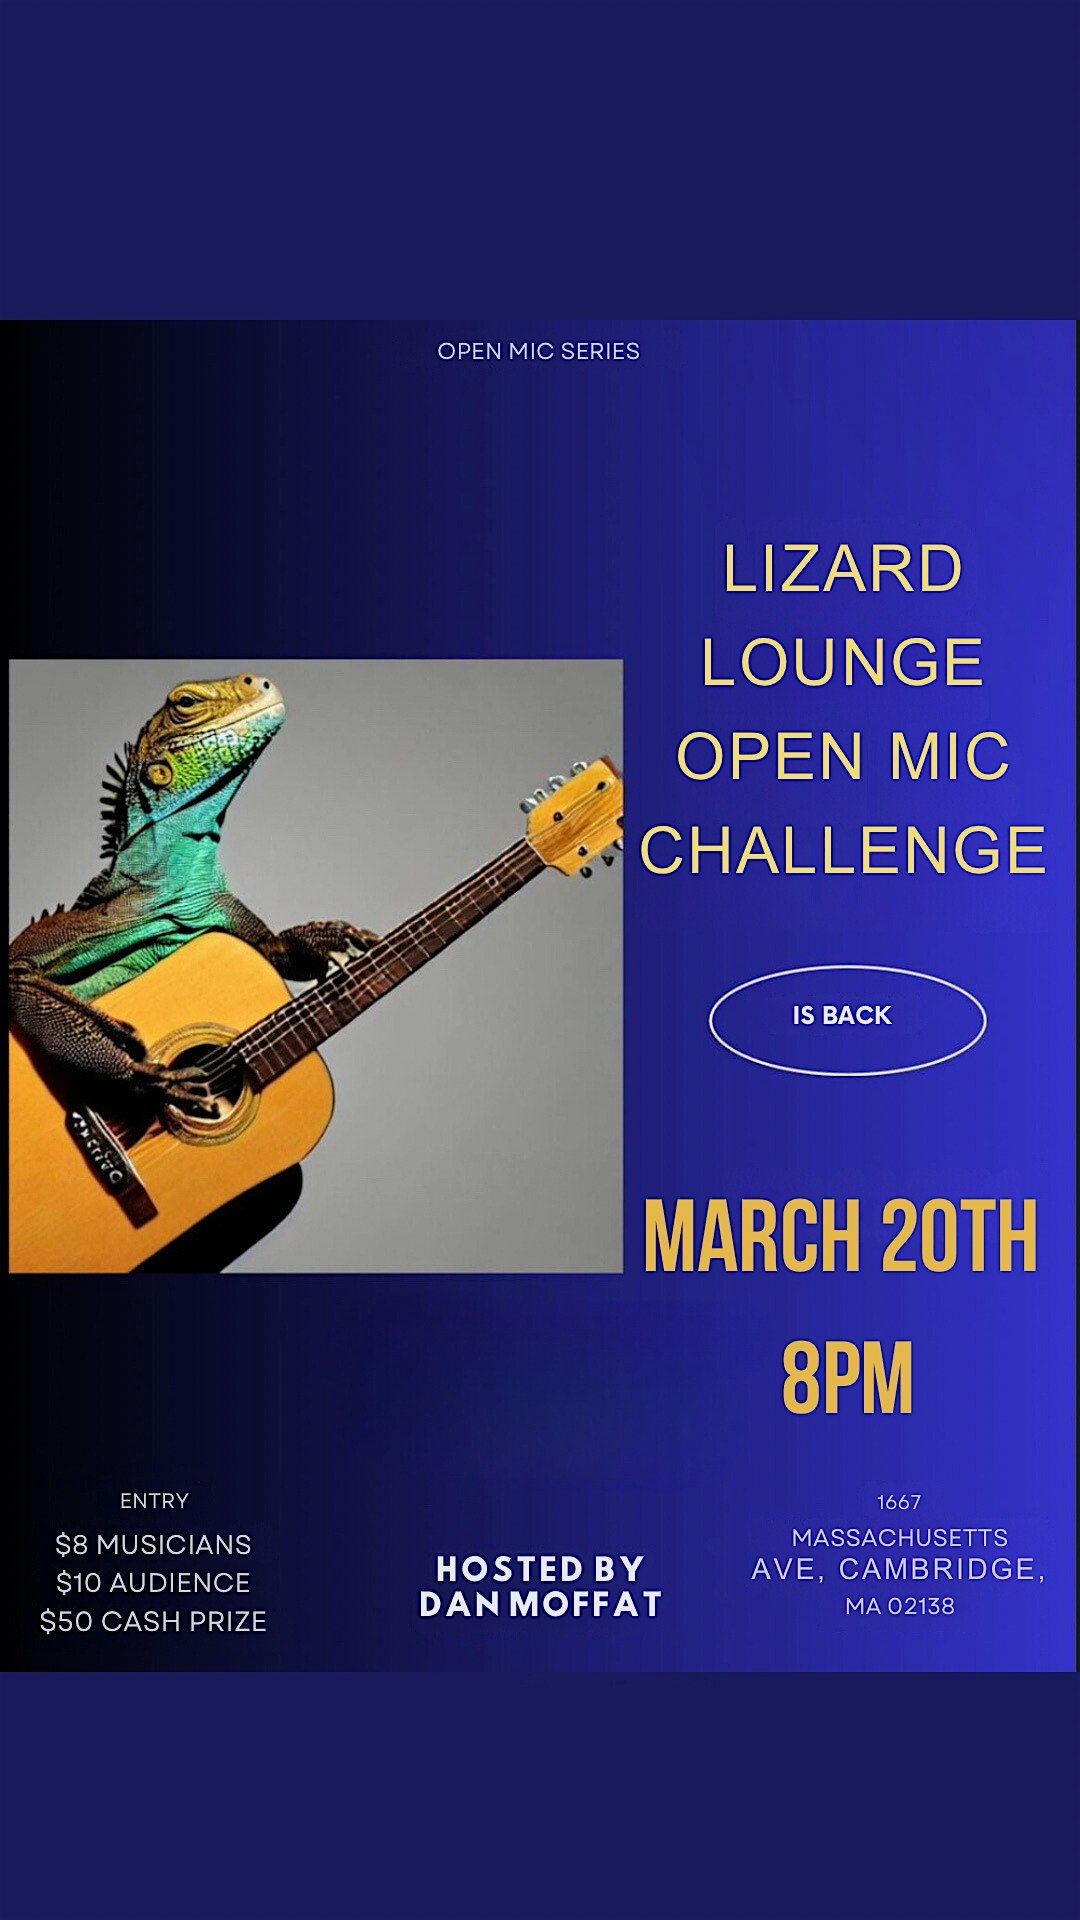 Lizard Lounge Open Mic Challenge